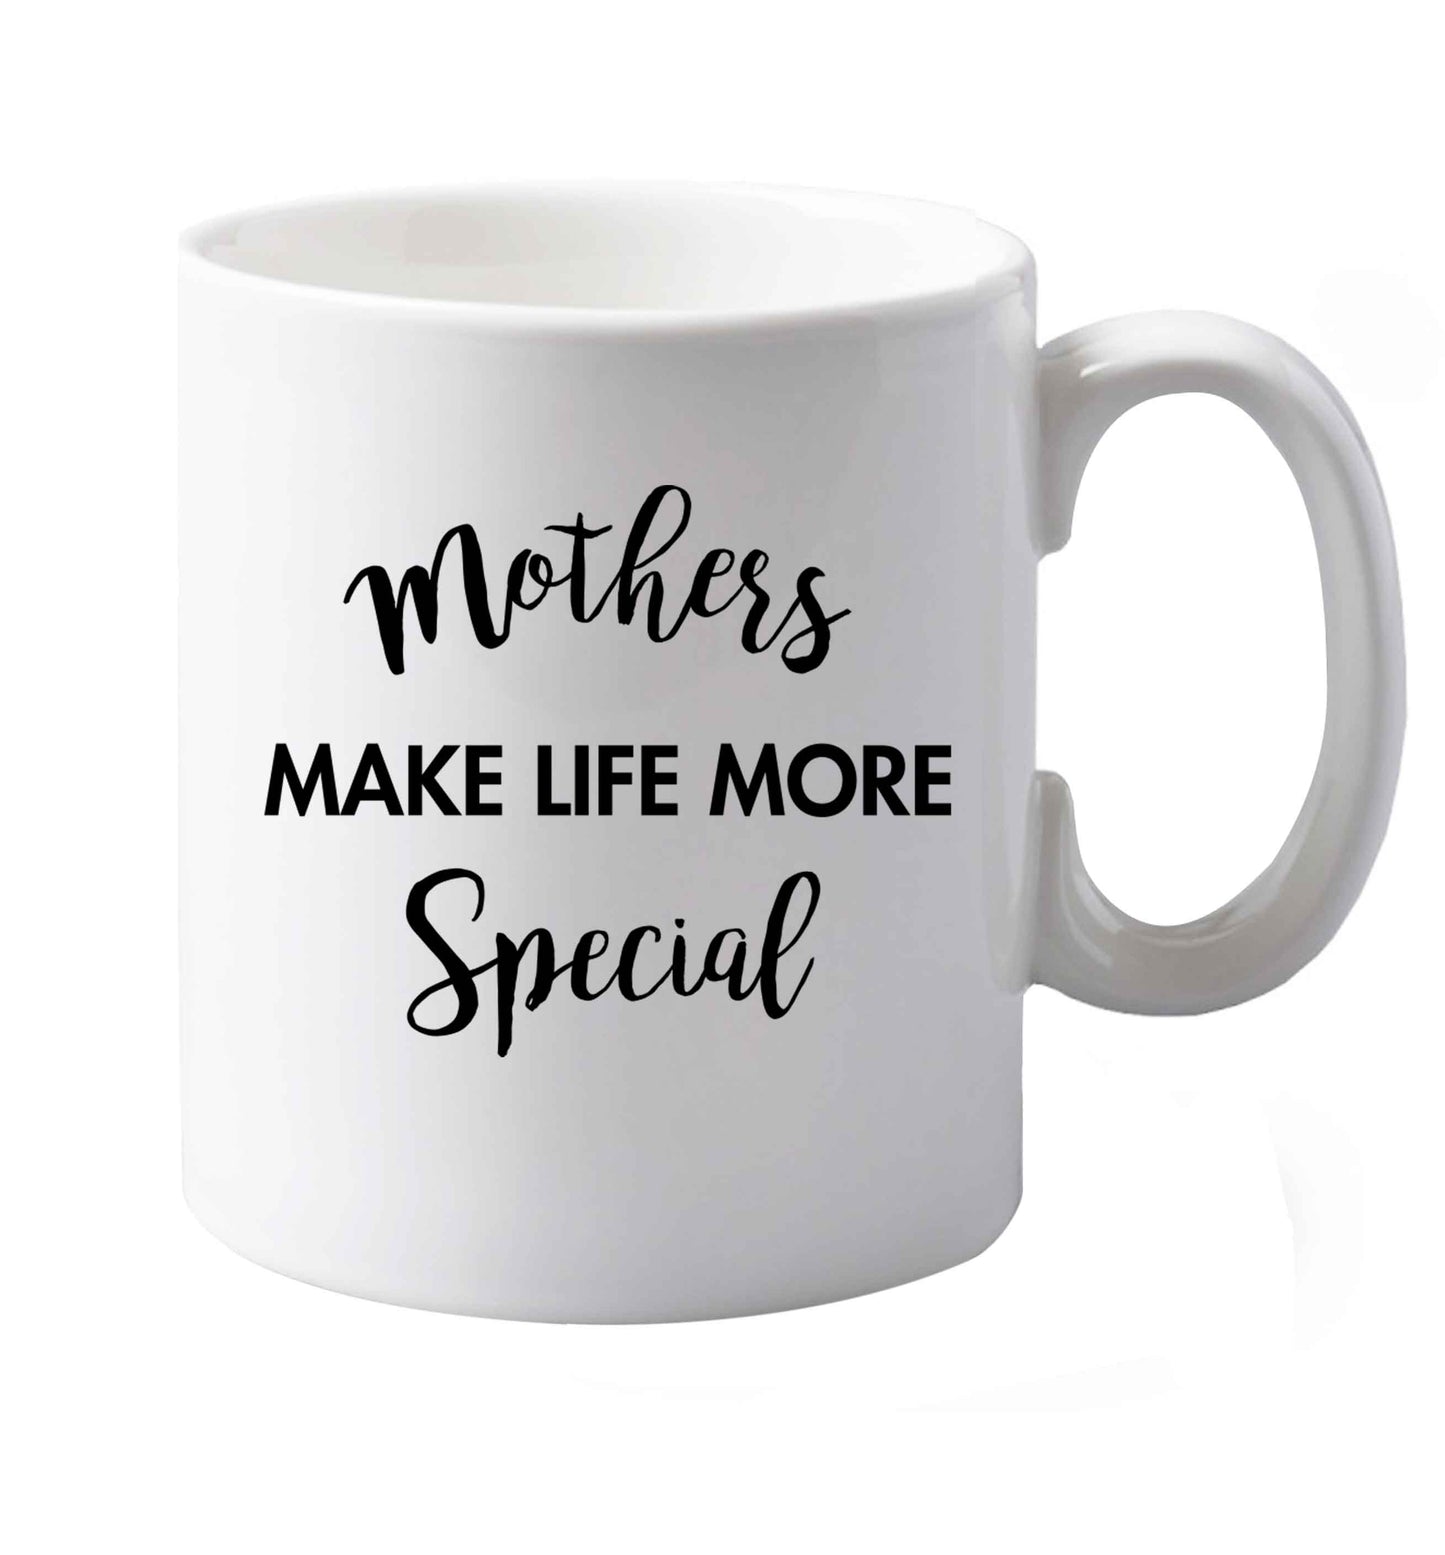 10 oz Mother's make life more special ceramic mug both sides